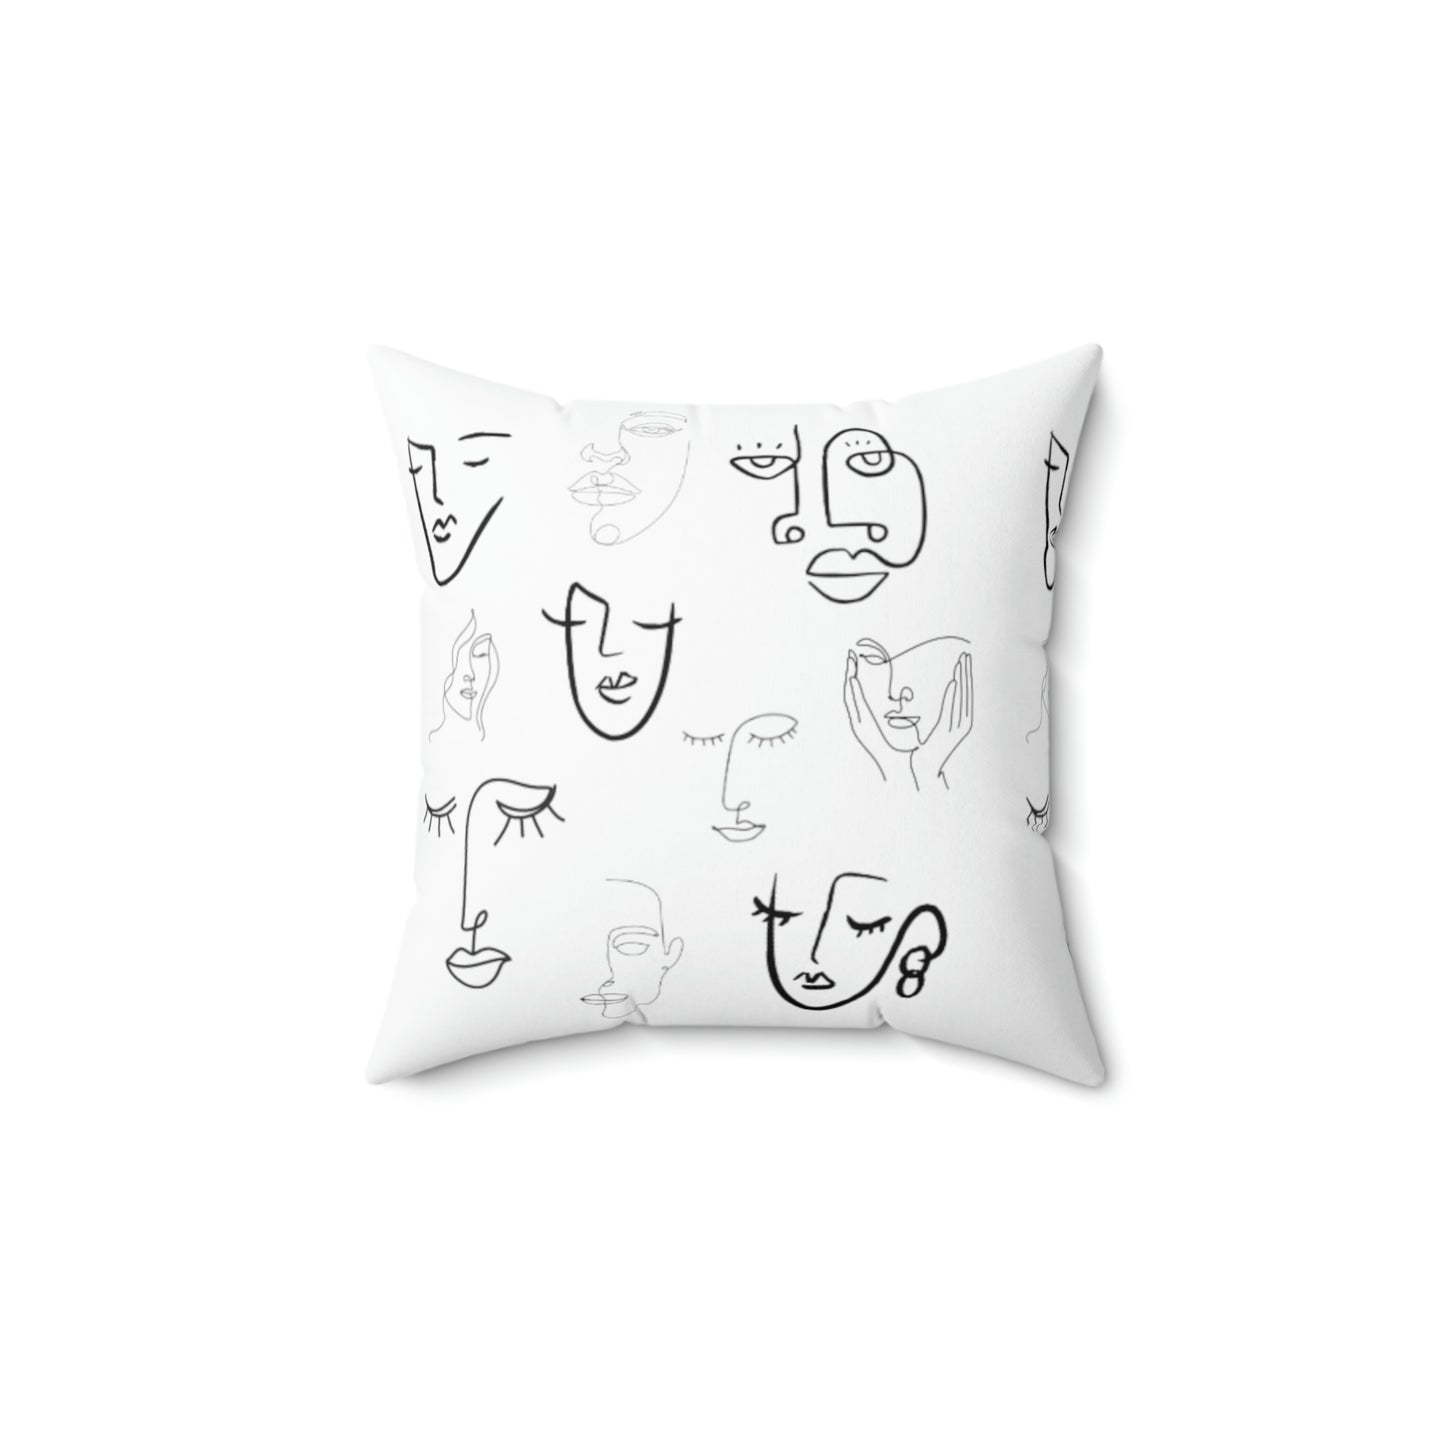 Many Faceswhite - Spun Polyester Square Pillow